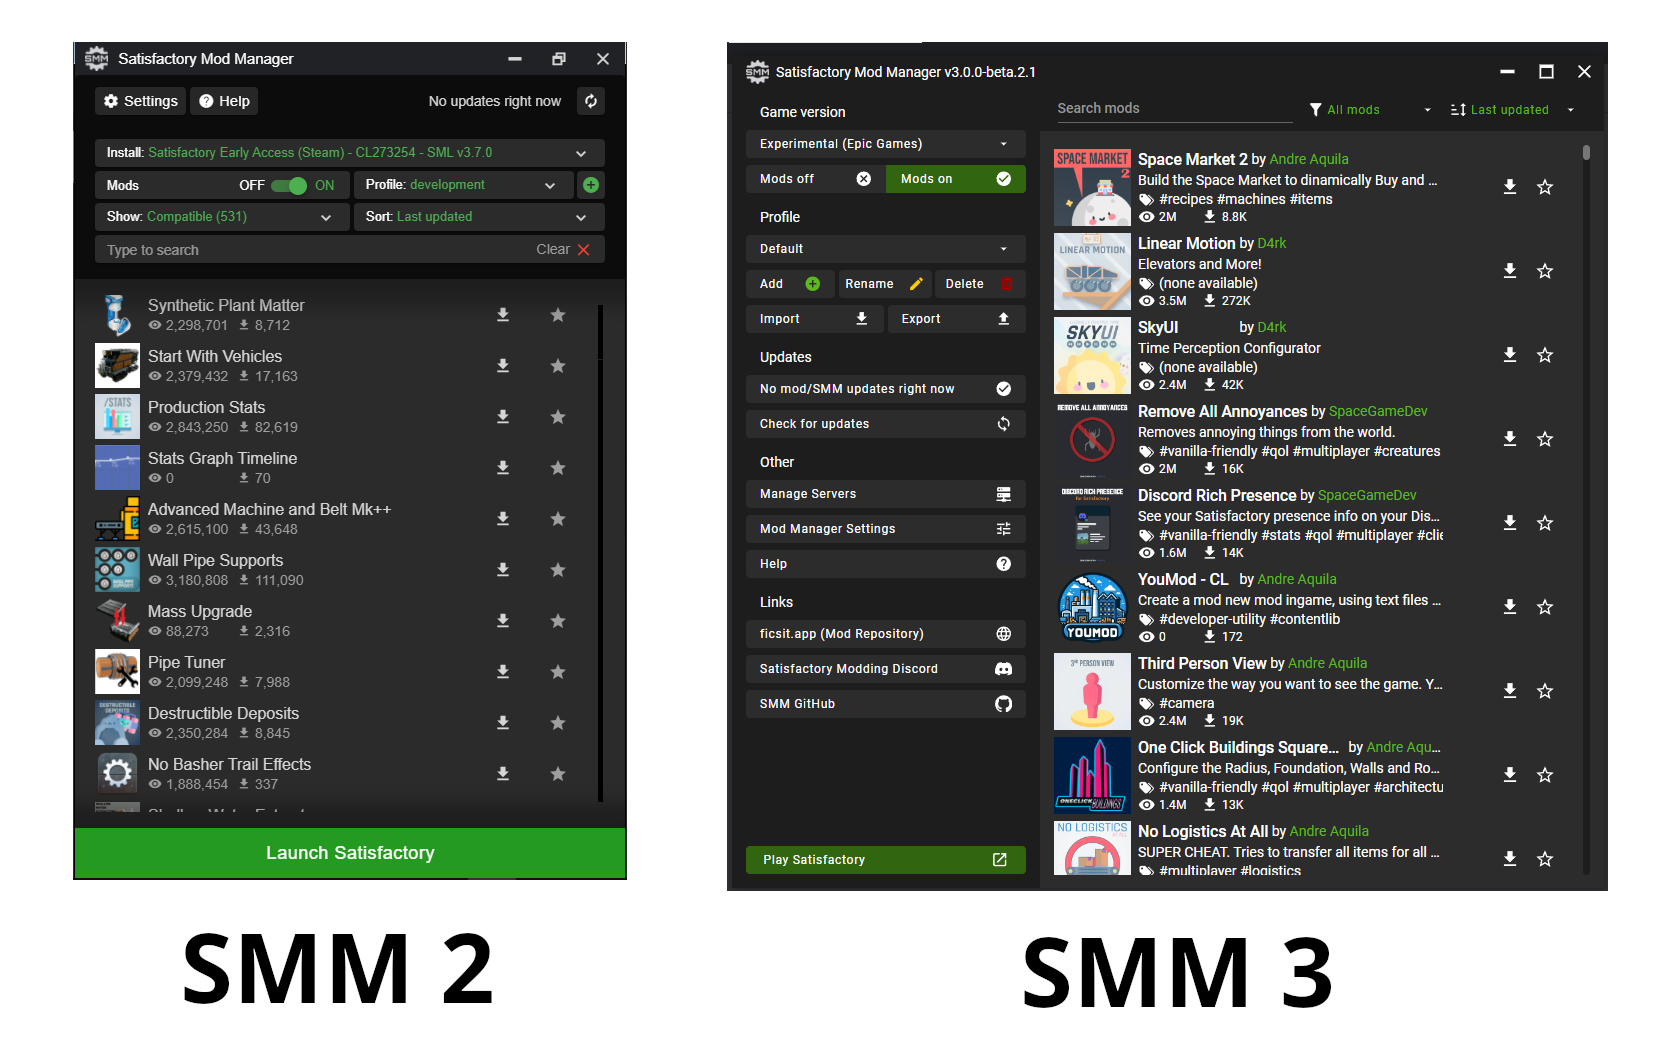 Satisfactory Mod Manager 2 vs 3 comparison